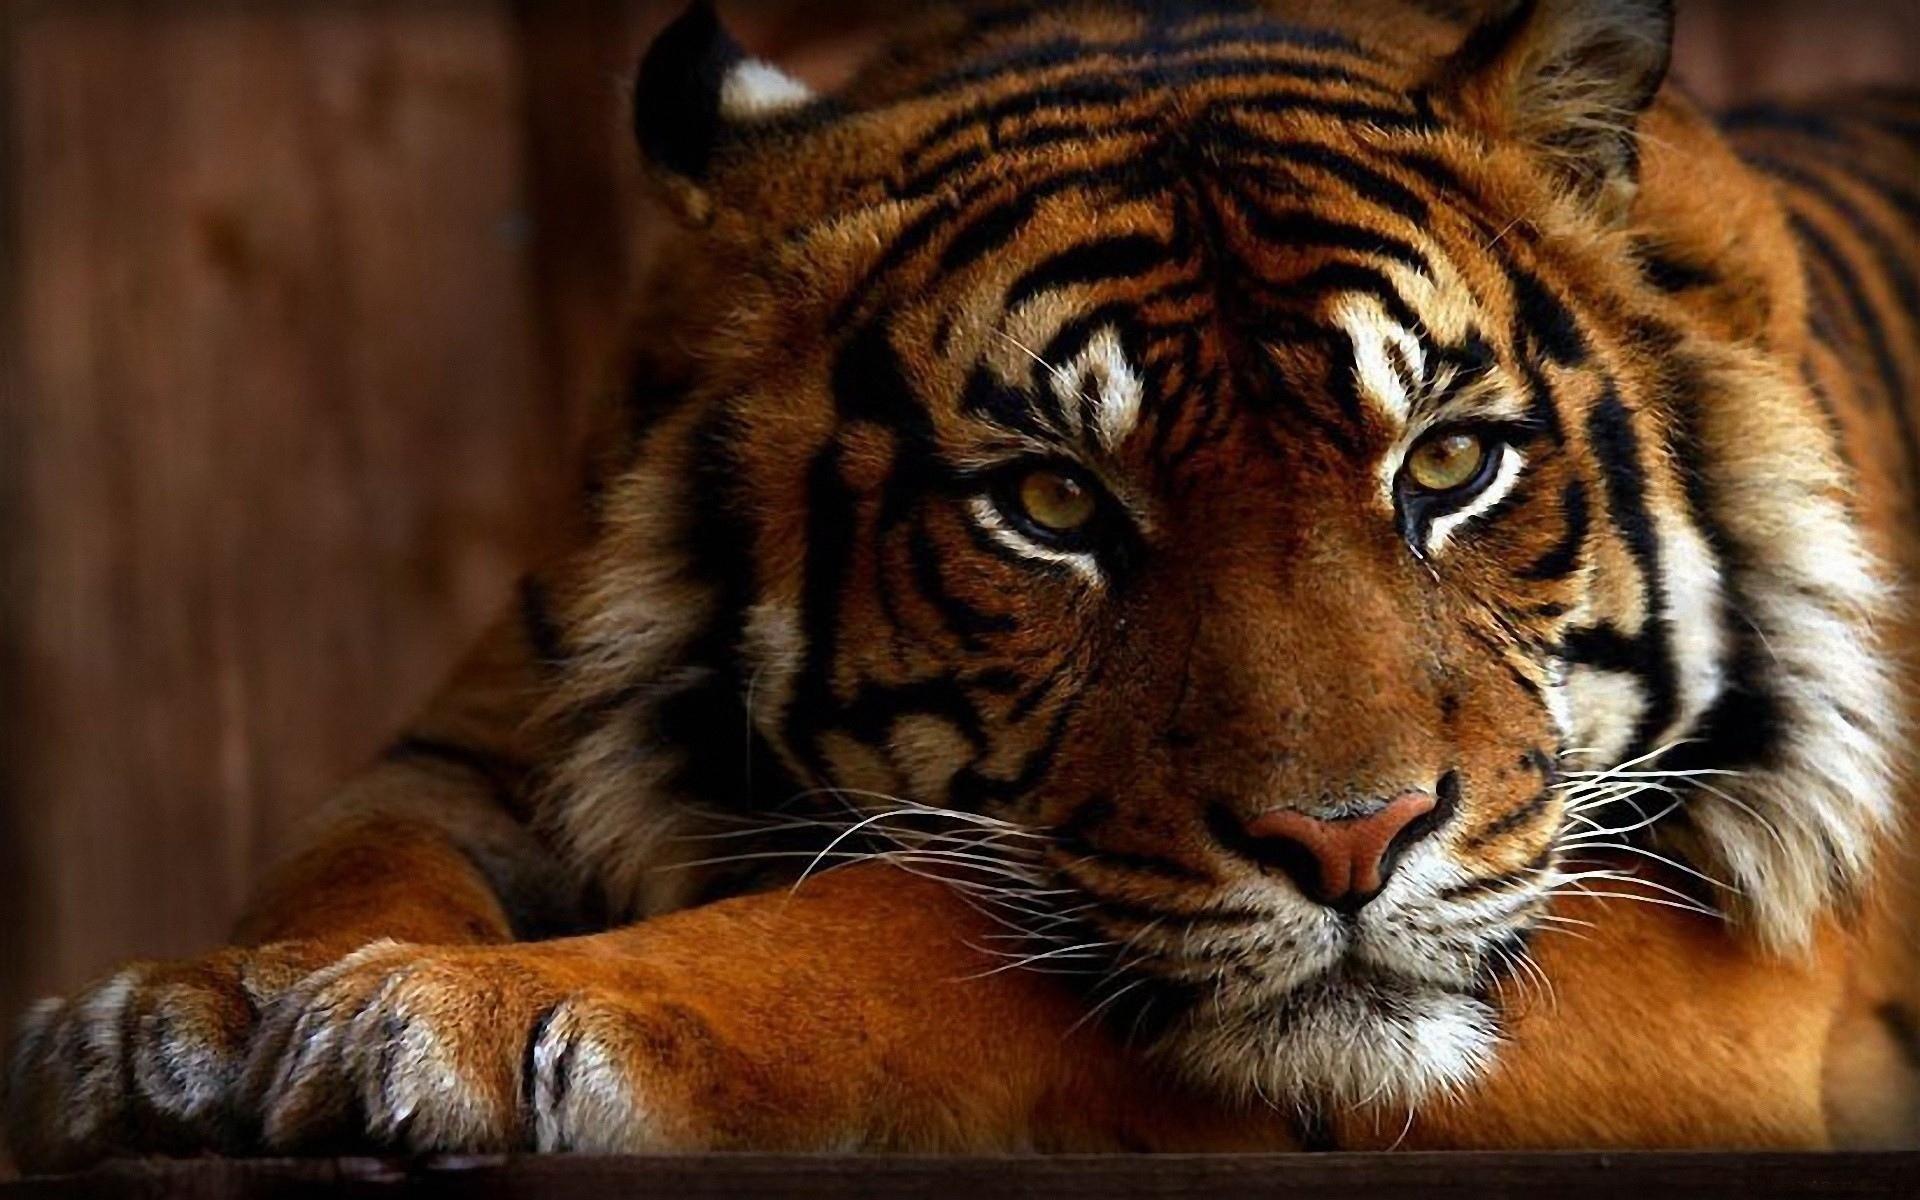 Tiger wallpaper